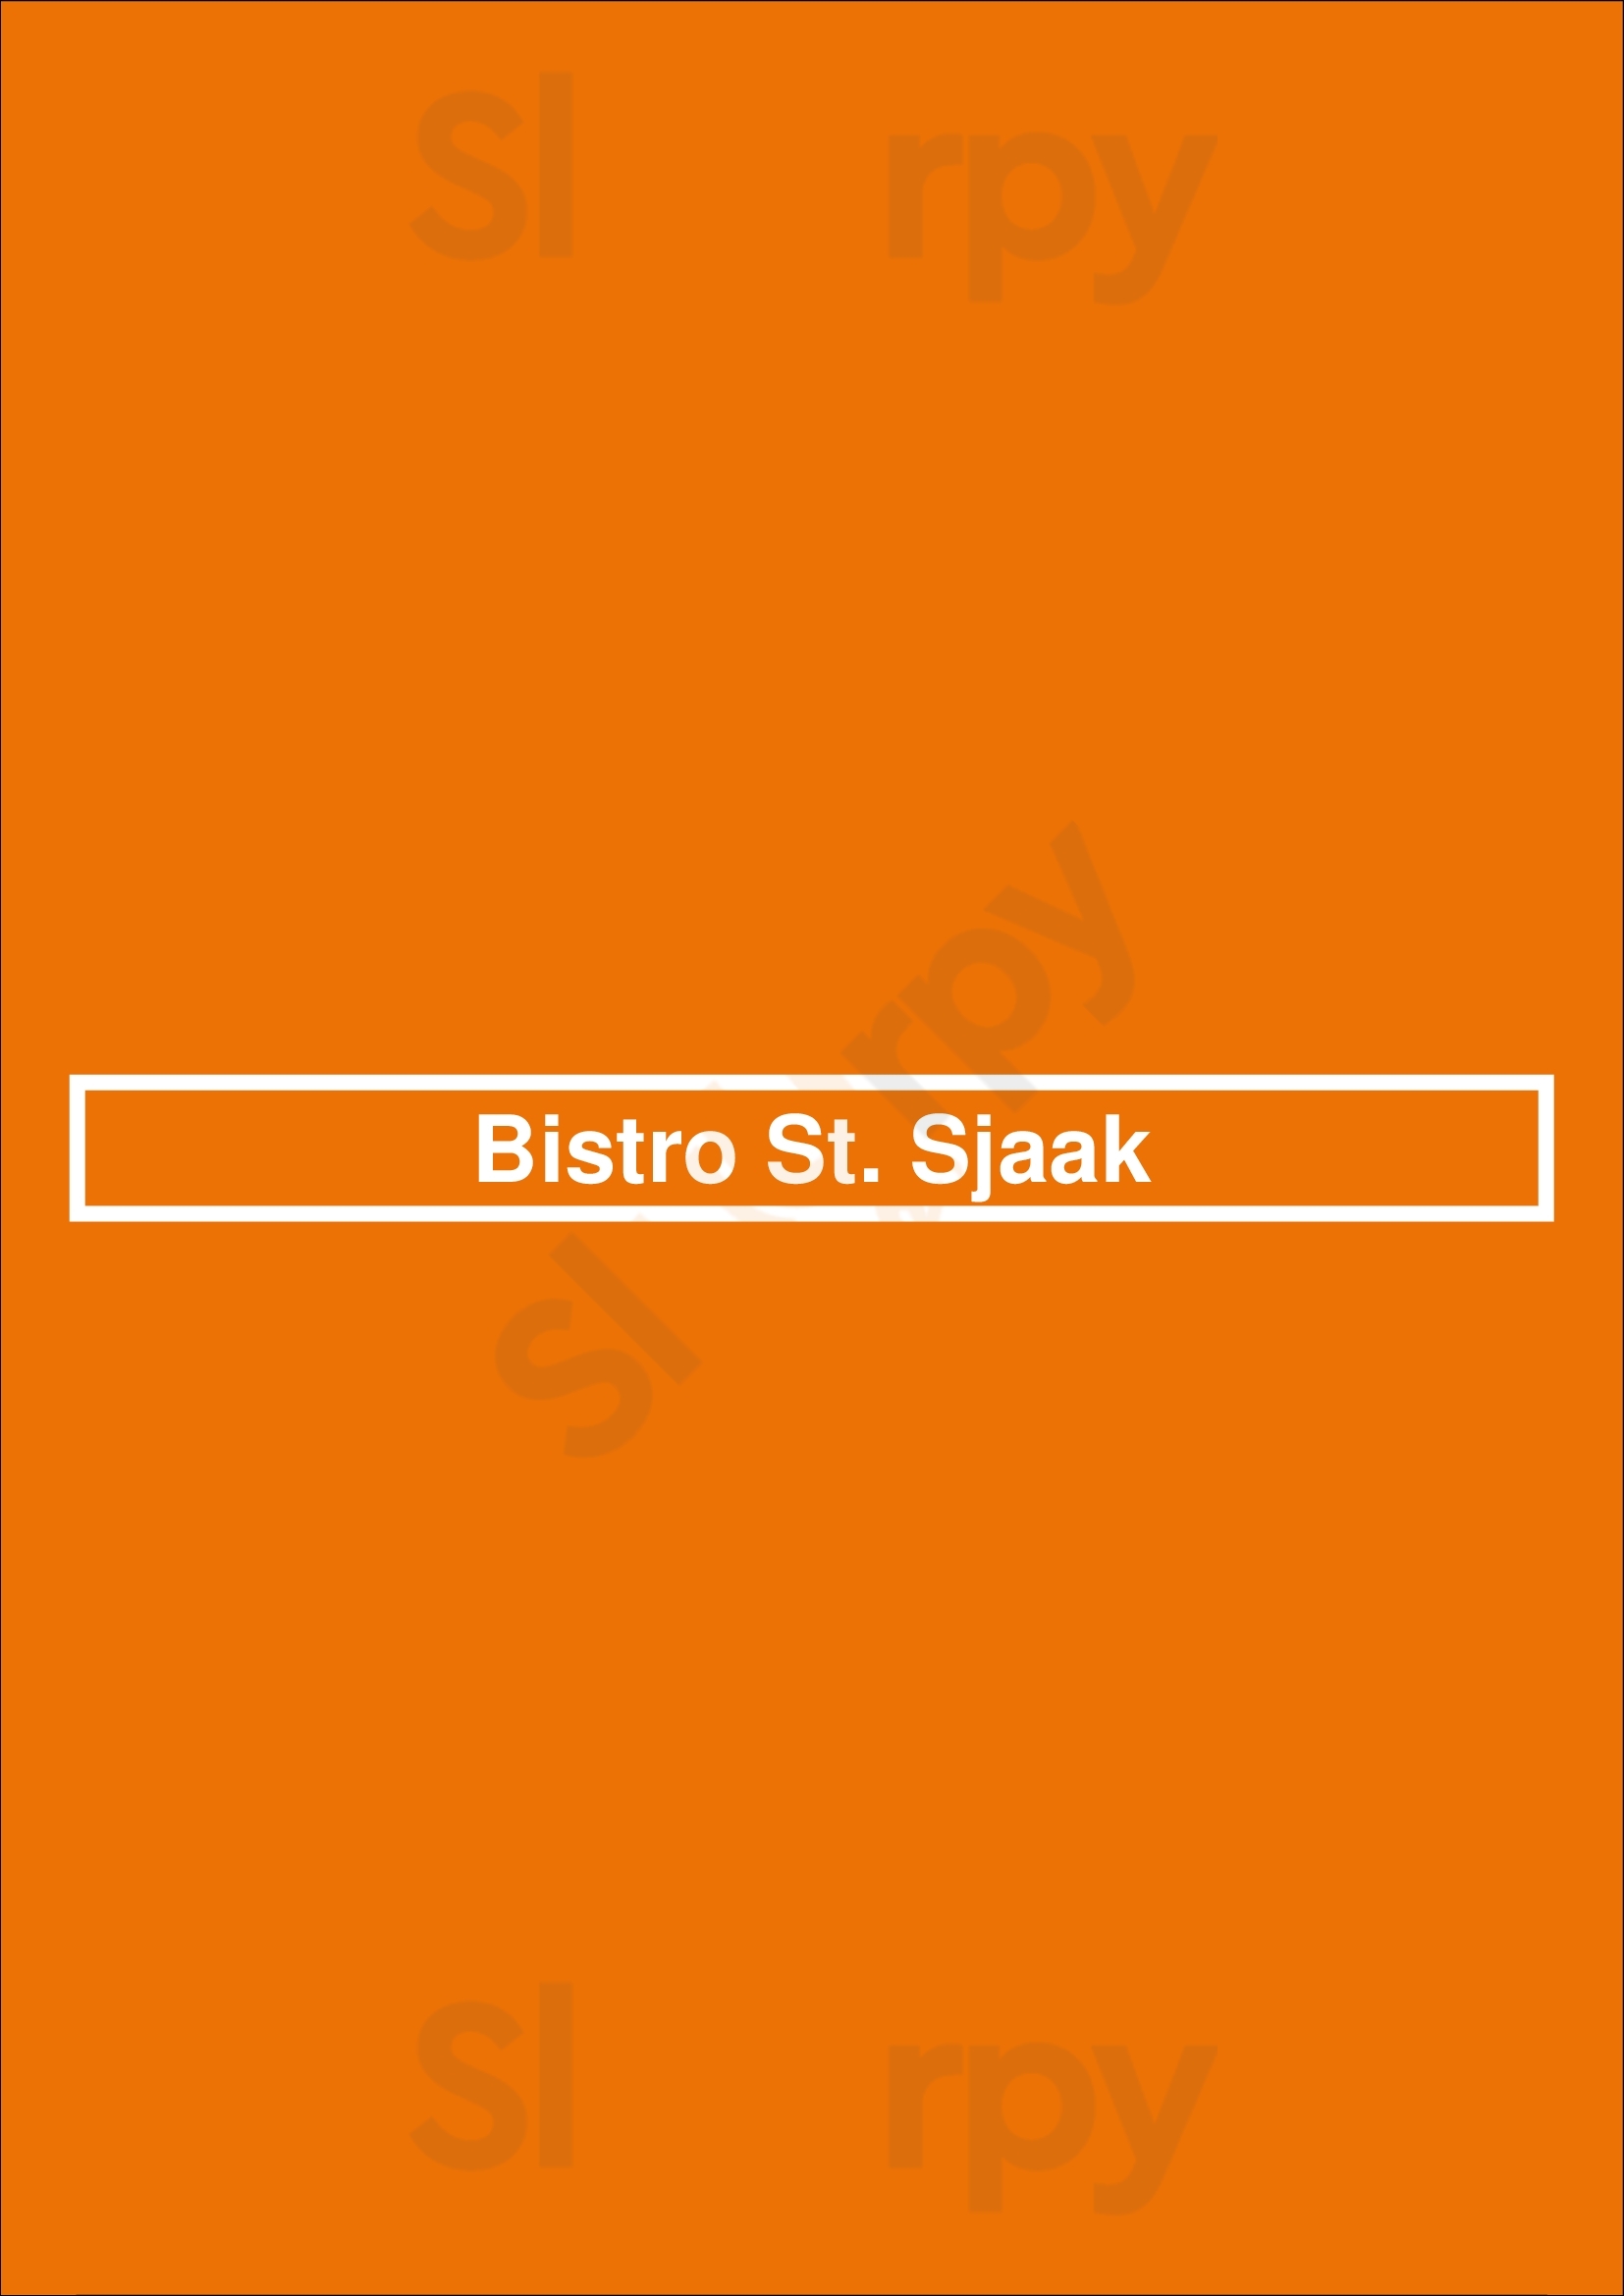 Bistro St. Sjaak Tilburg Menu - 1